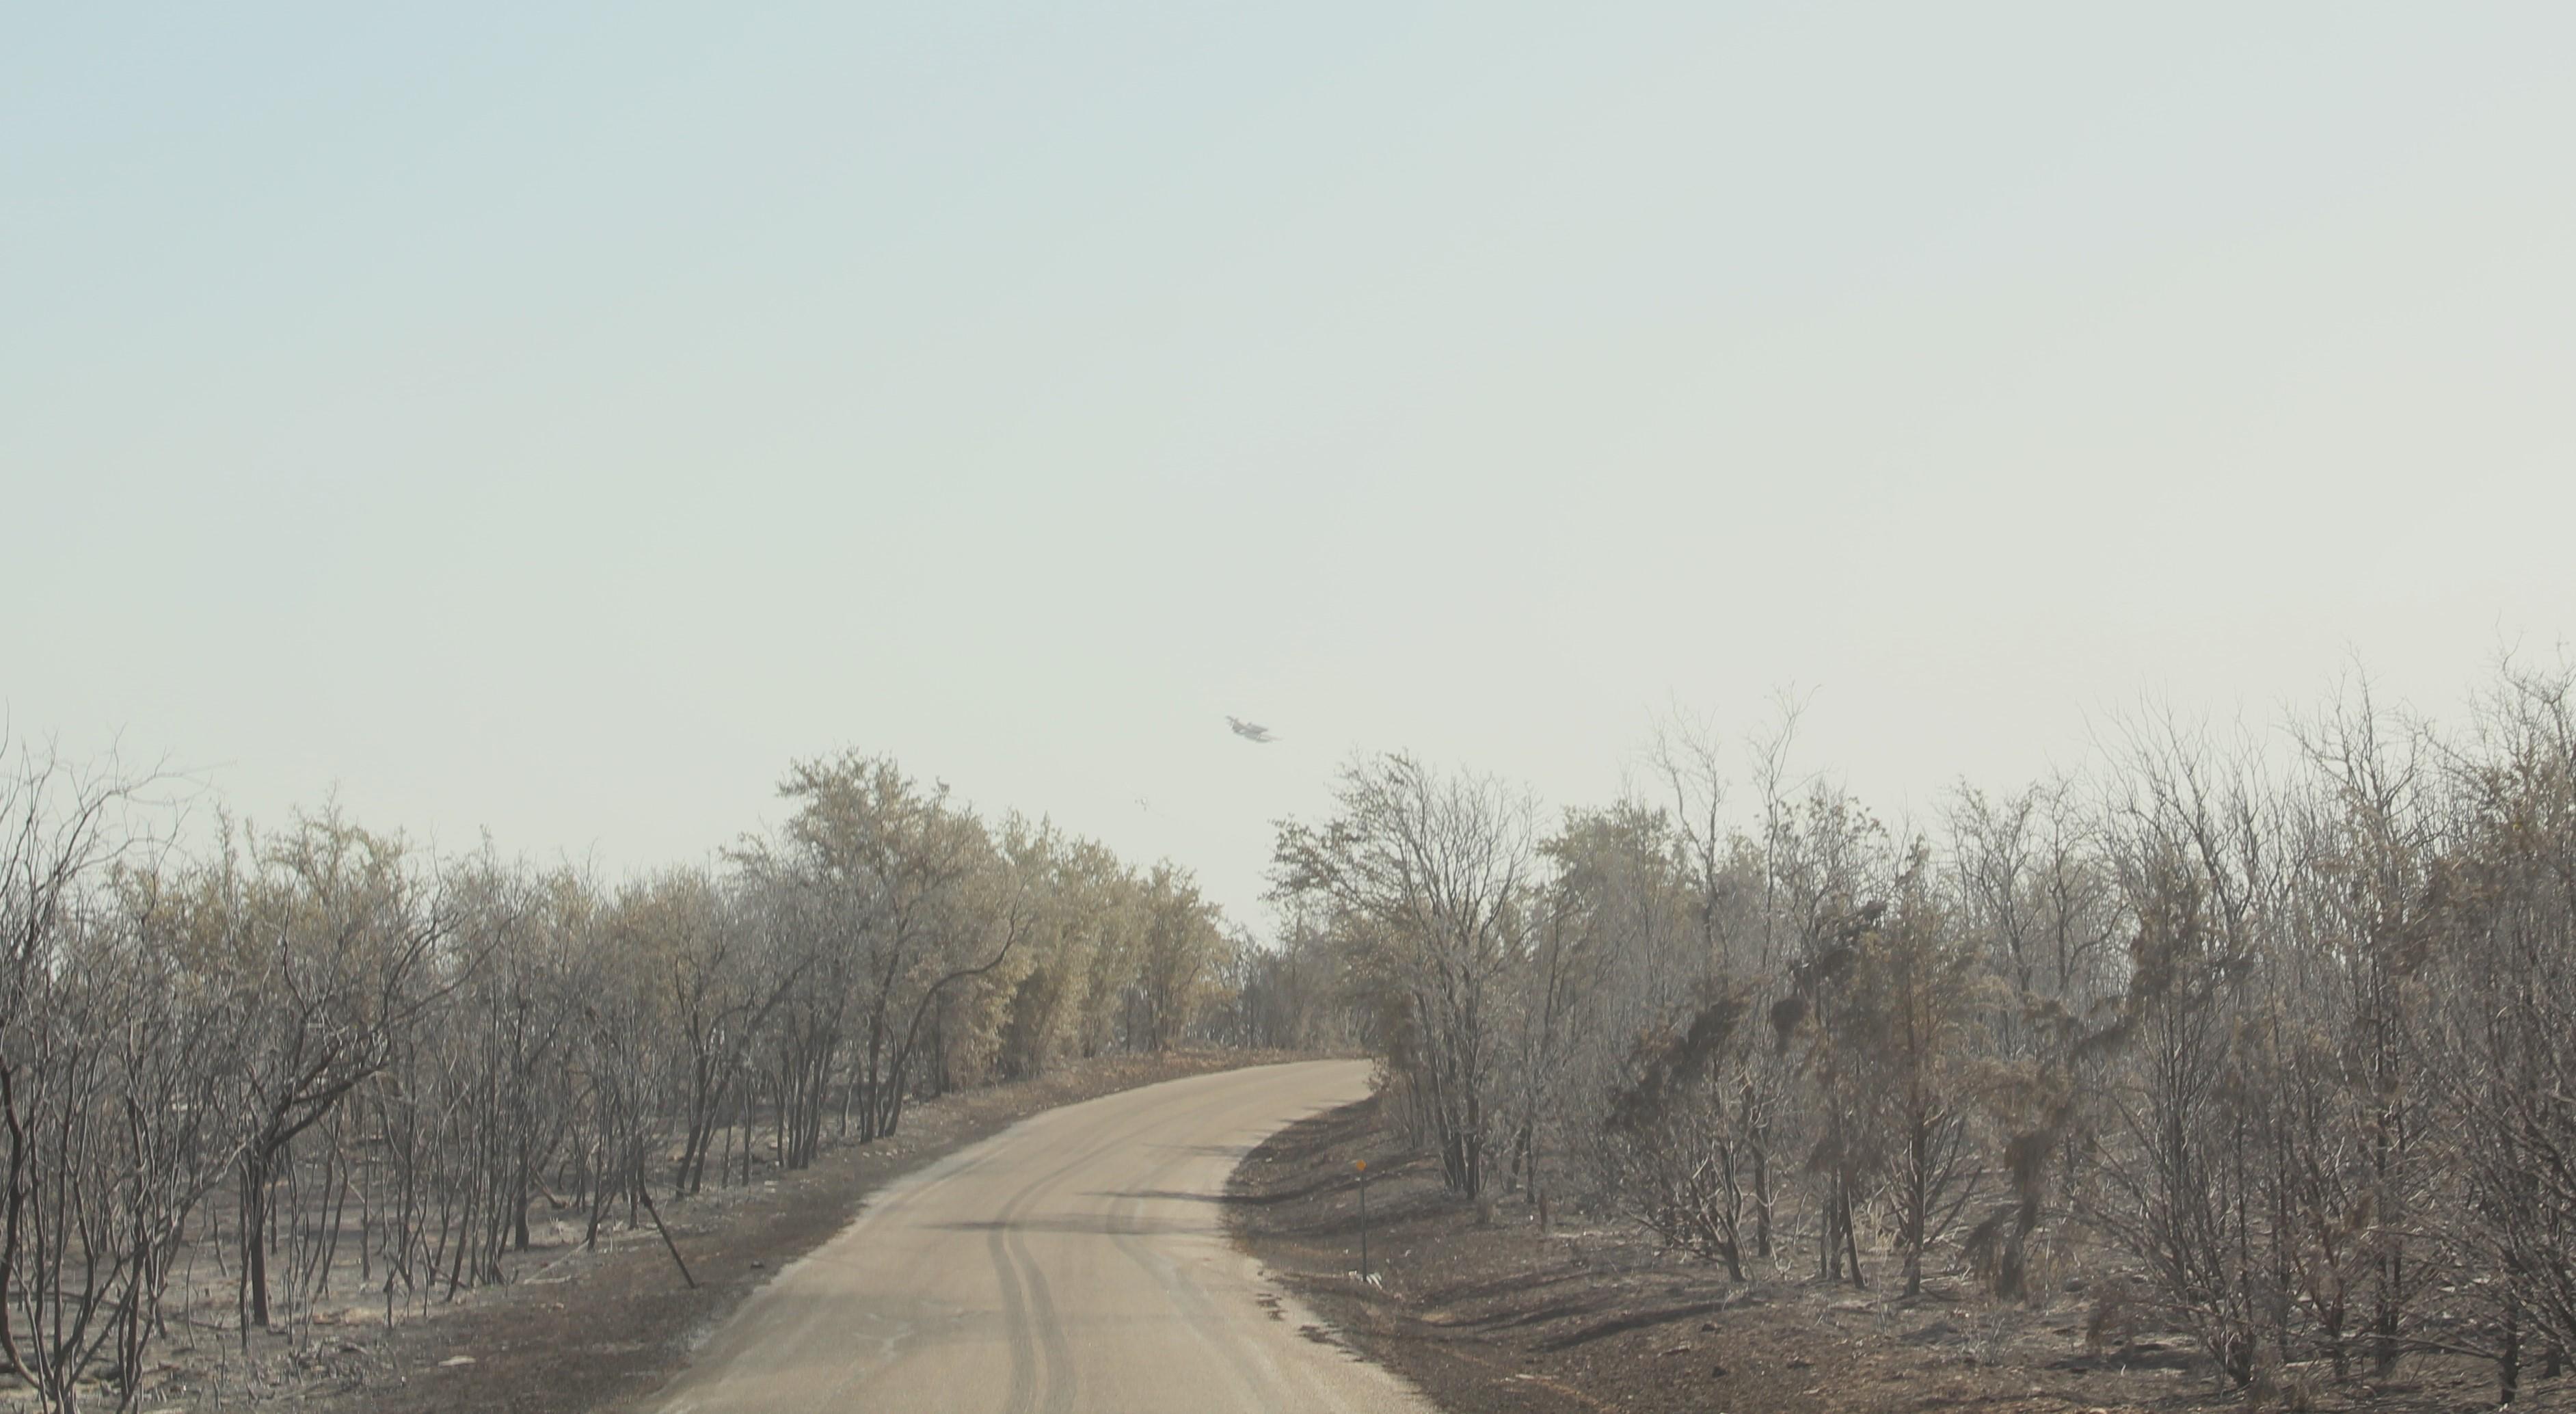 A plane flies over the Chalk Mountain Fire area, ready to drop retardant